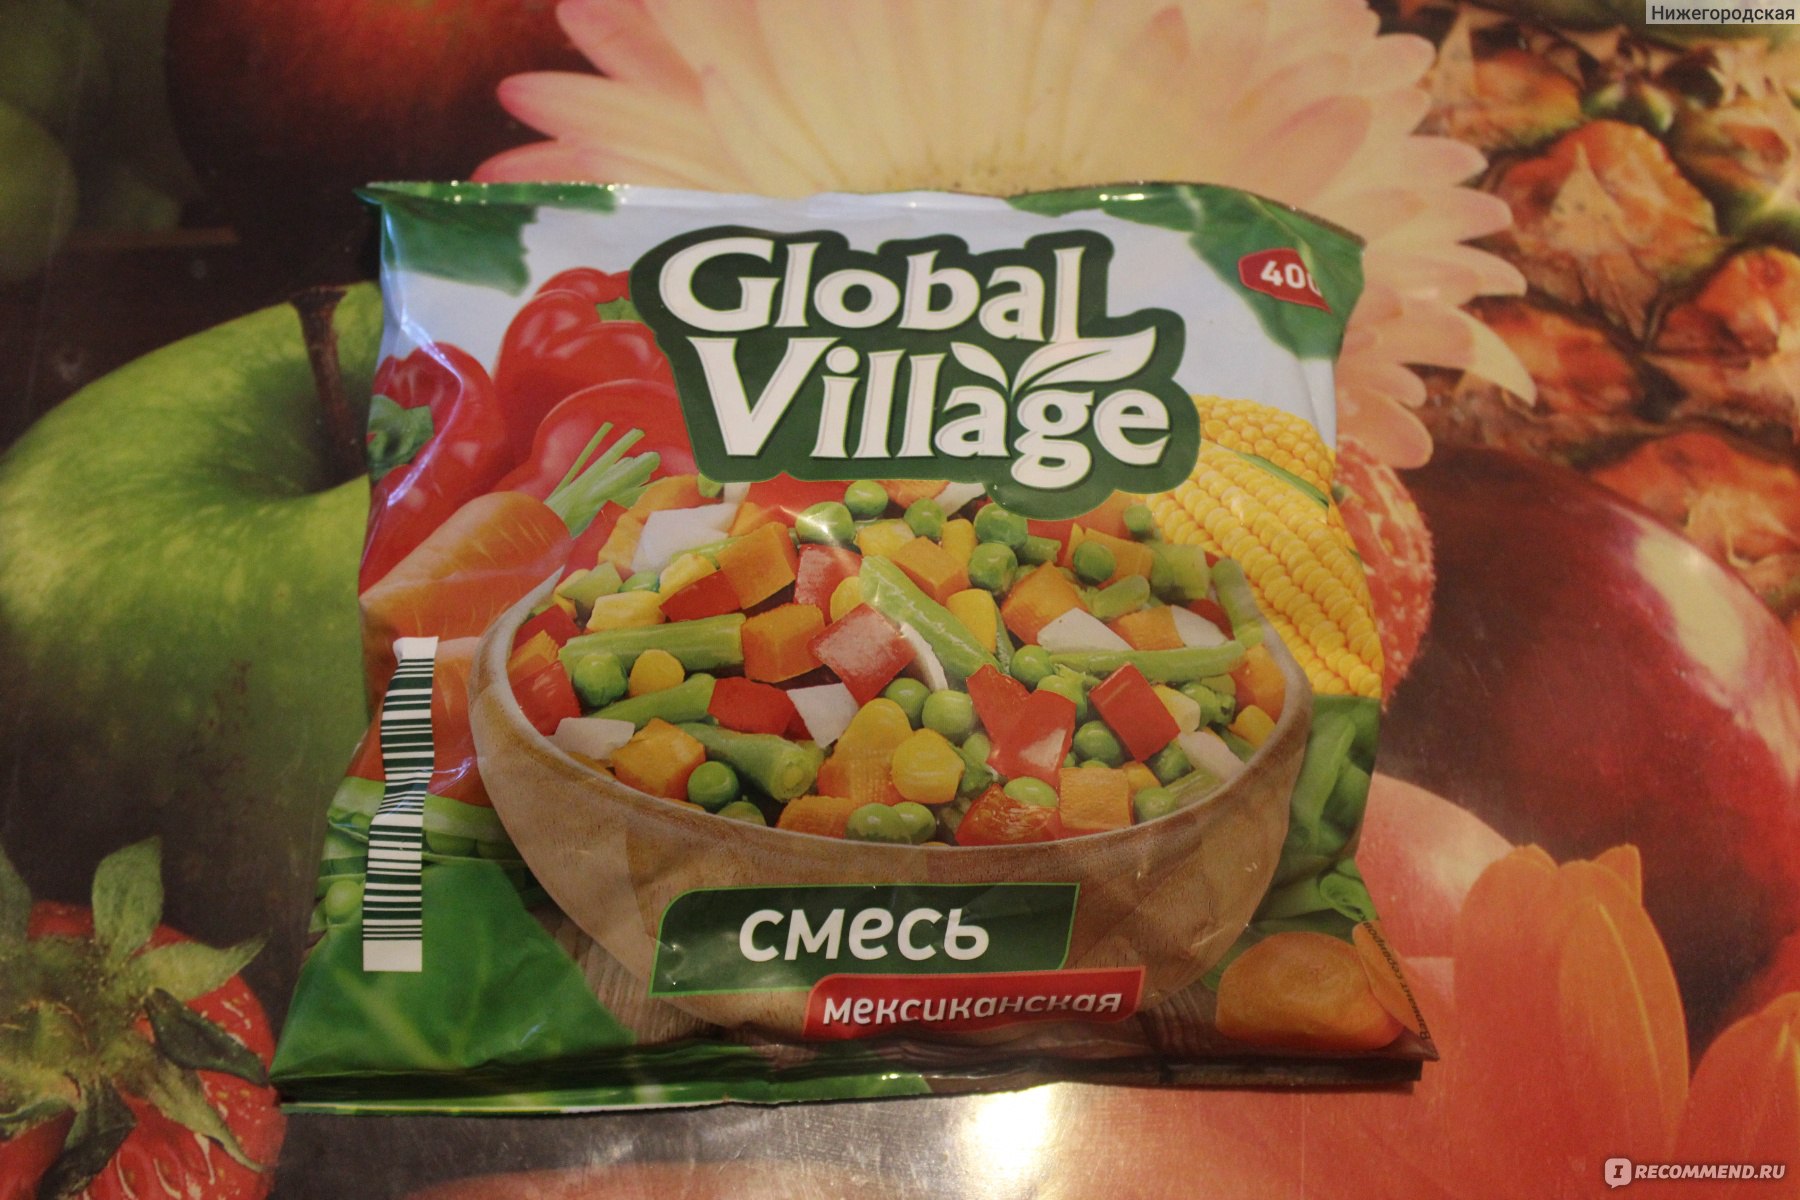 Global village суп. Смесь овощная Global Village Мексиканская 400г. Глобал Вилладж Мексиканская смесь. Смесь Мексиканская, Global Village, 400 г. Мексиканская смесь замороженная Global Village.